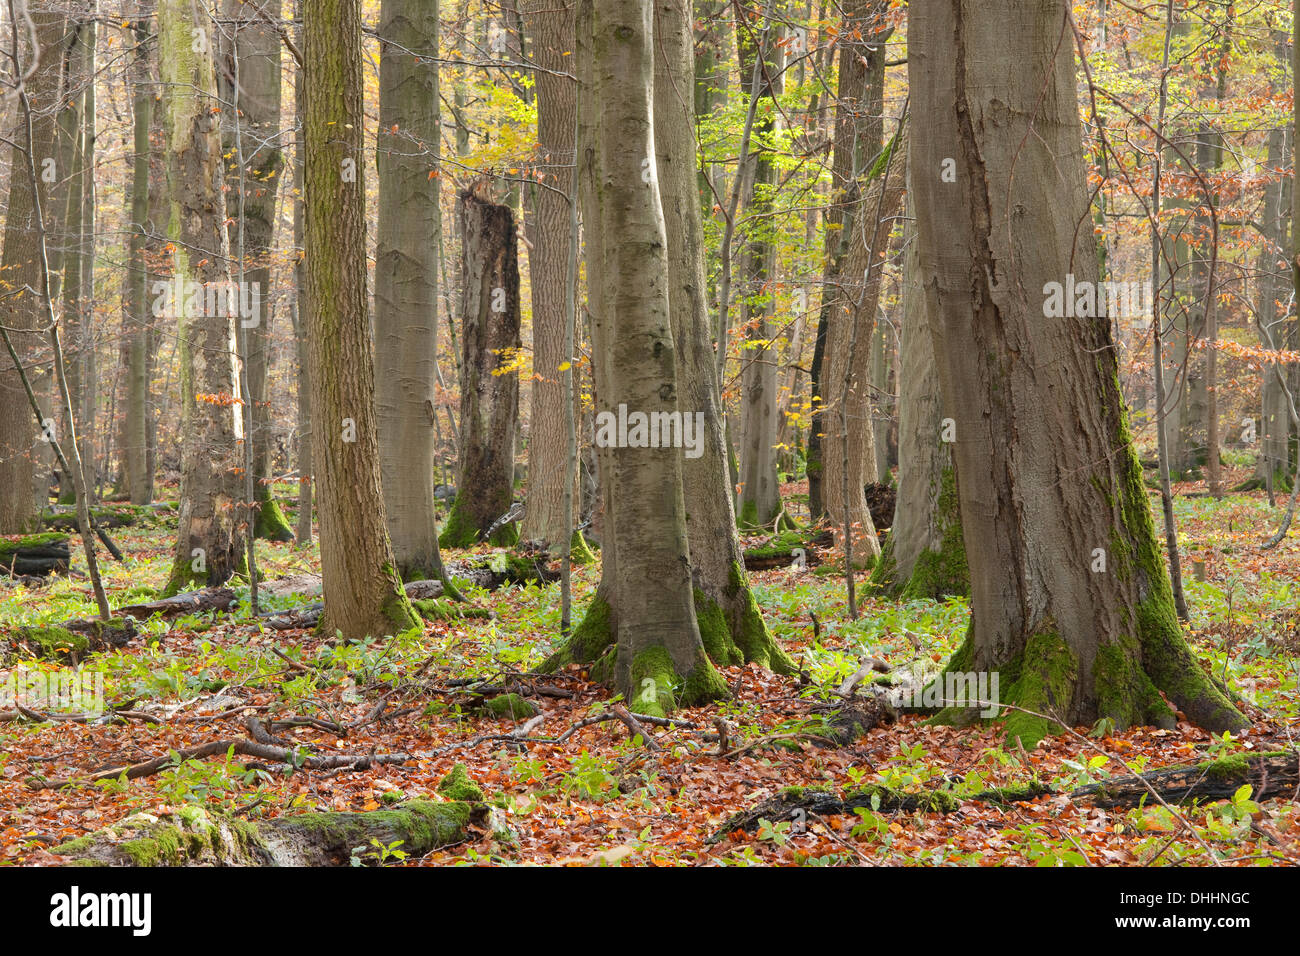 European Beech or Common Beech (Fagus sylvatica), European beech forest in autumn, Hainich National Park, Thuringia, Germany Stock Photo